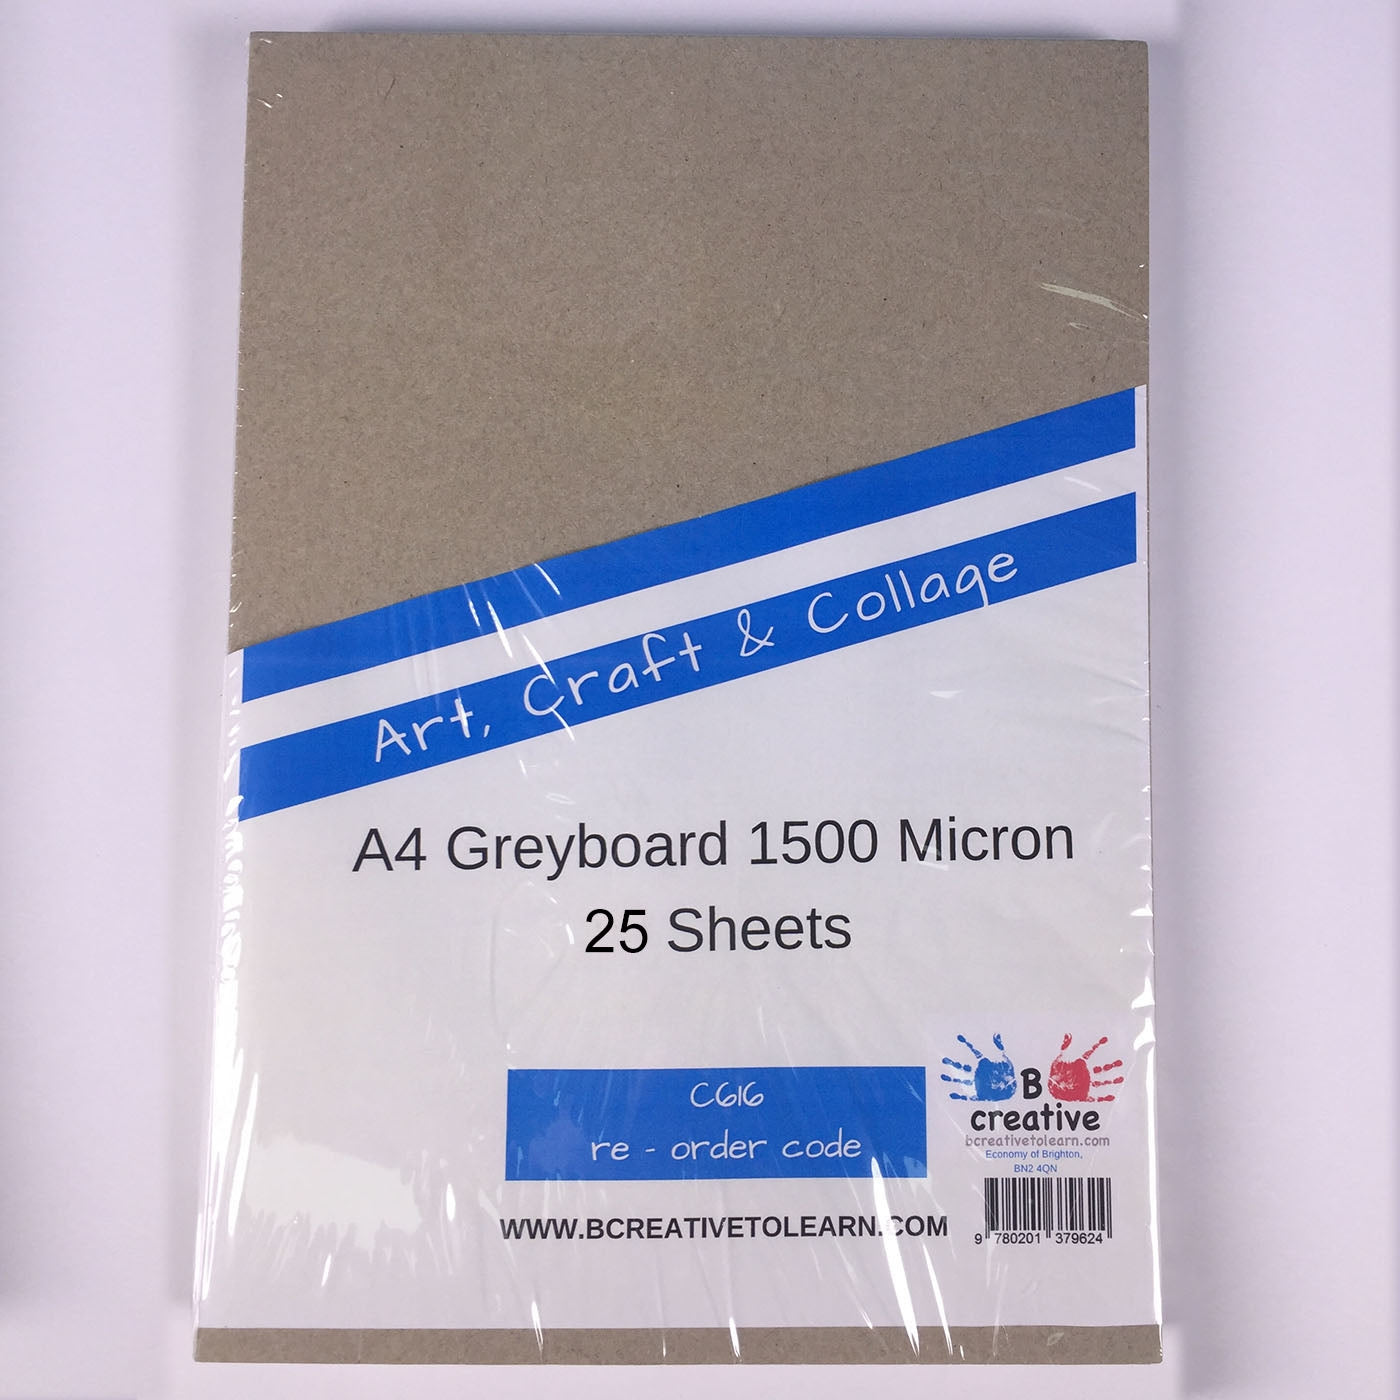 Greyboard tough card backing board